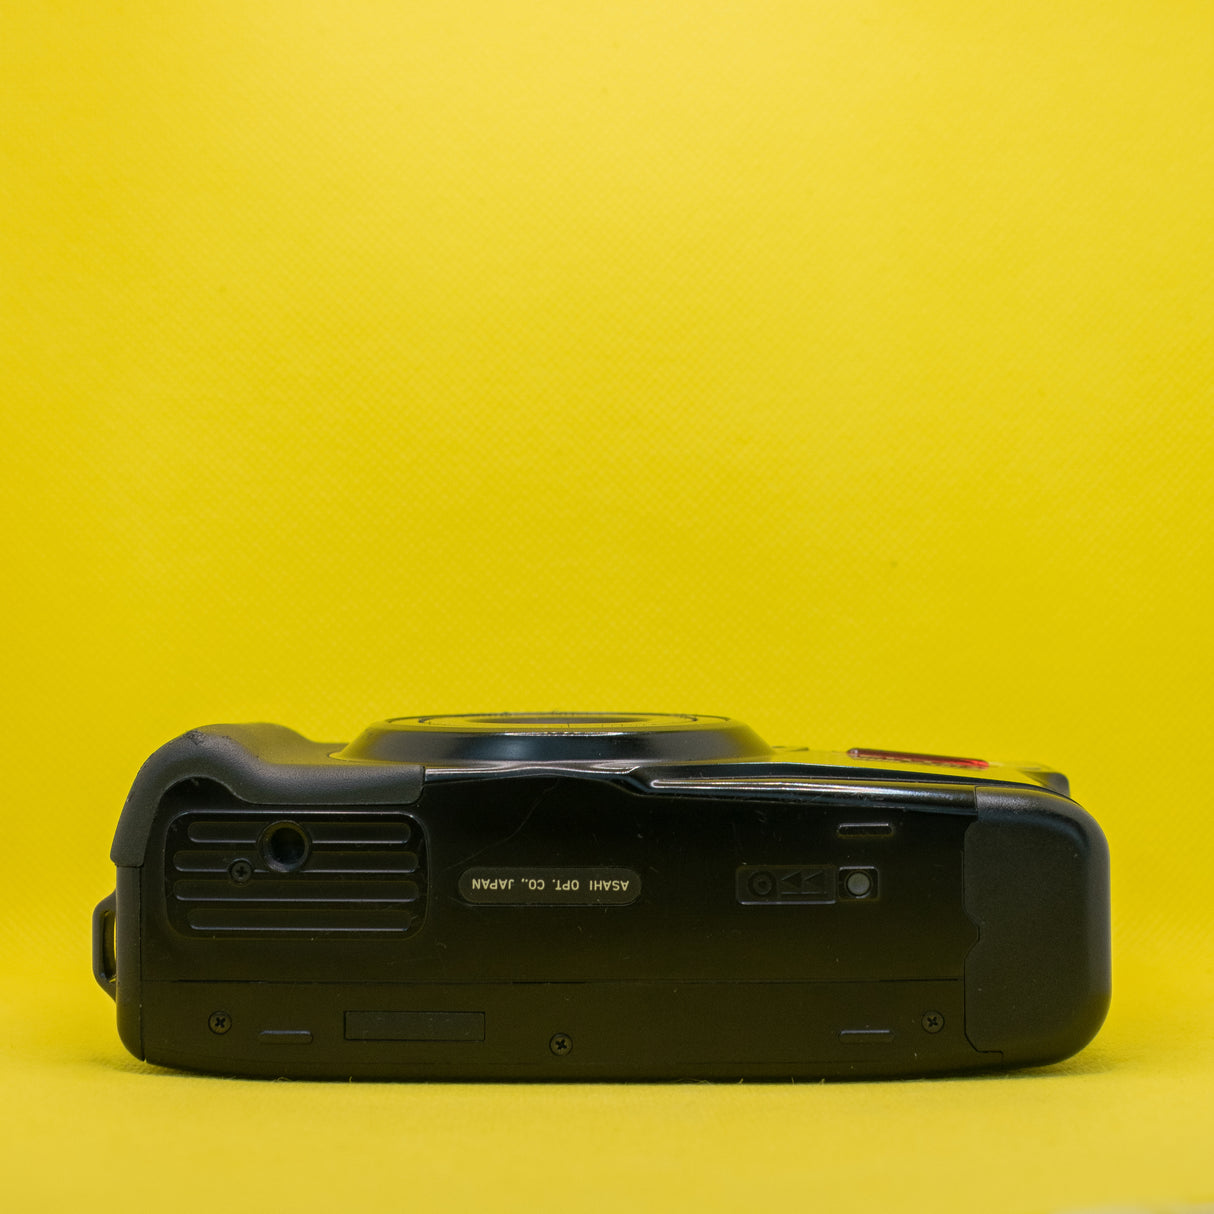 Pentax Zoom 70X - Fotocamera a pellicola 35 mm